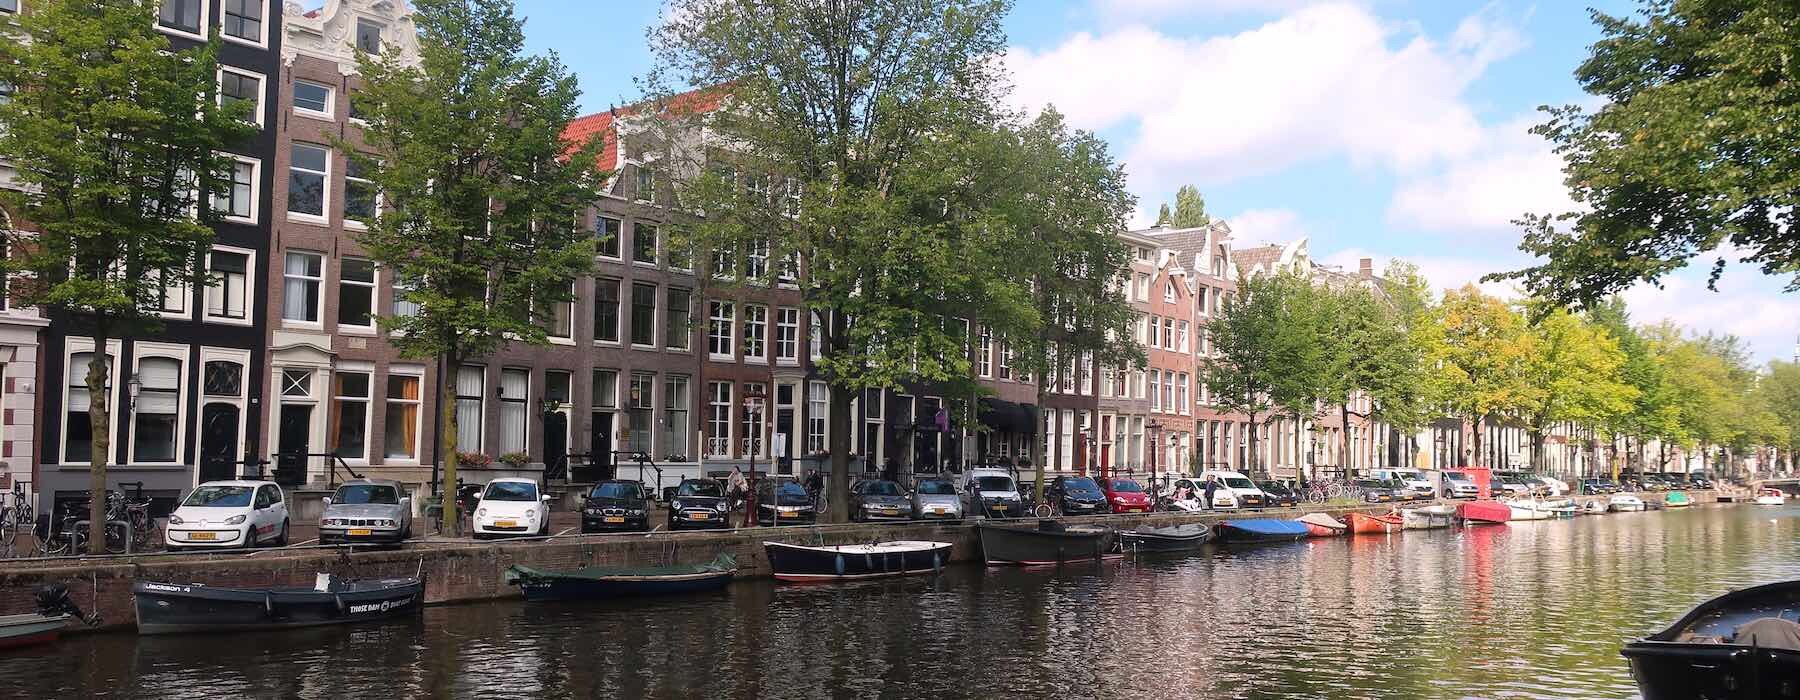 Best Amsterdam city tours